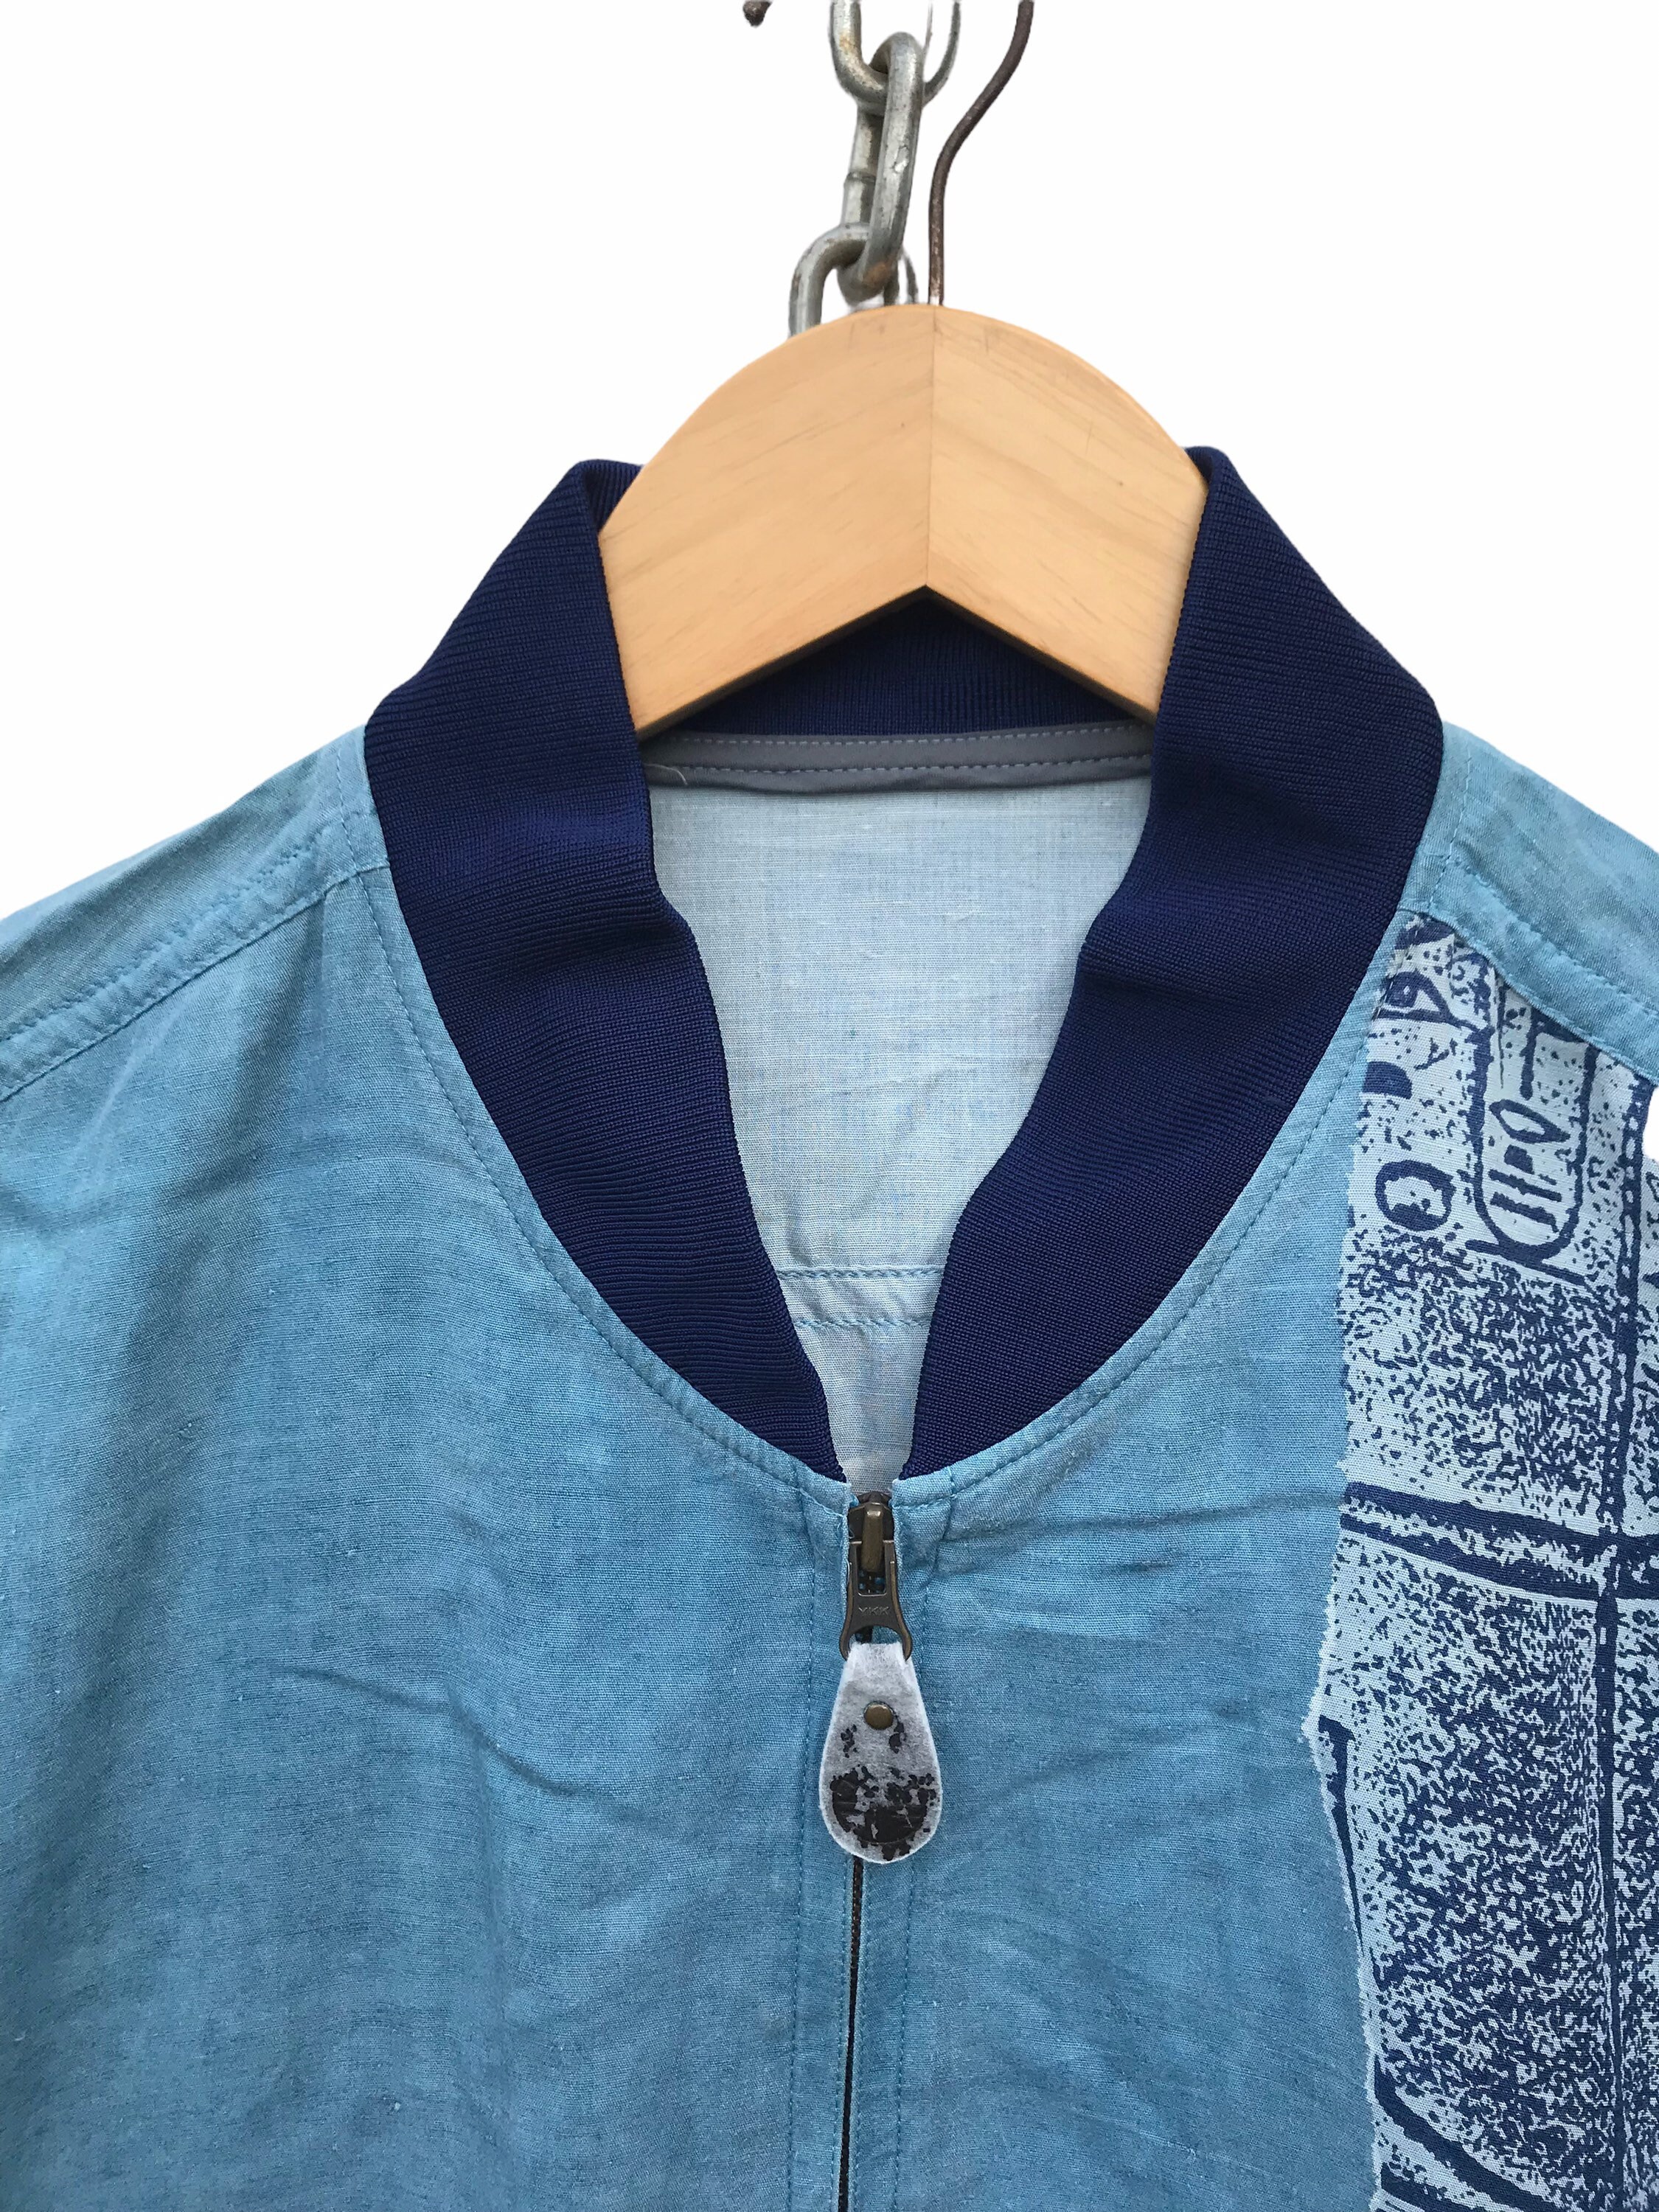 Louis Feraud Vintage Collarless Jacket, $199, farfetch.com